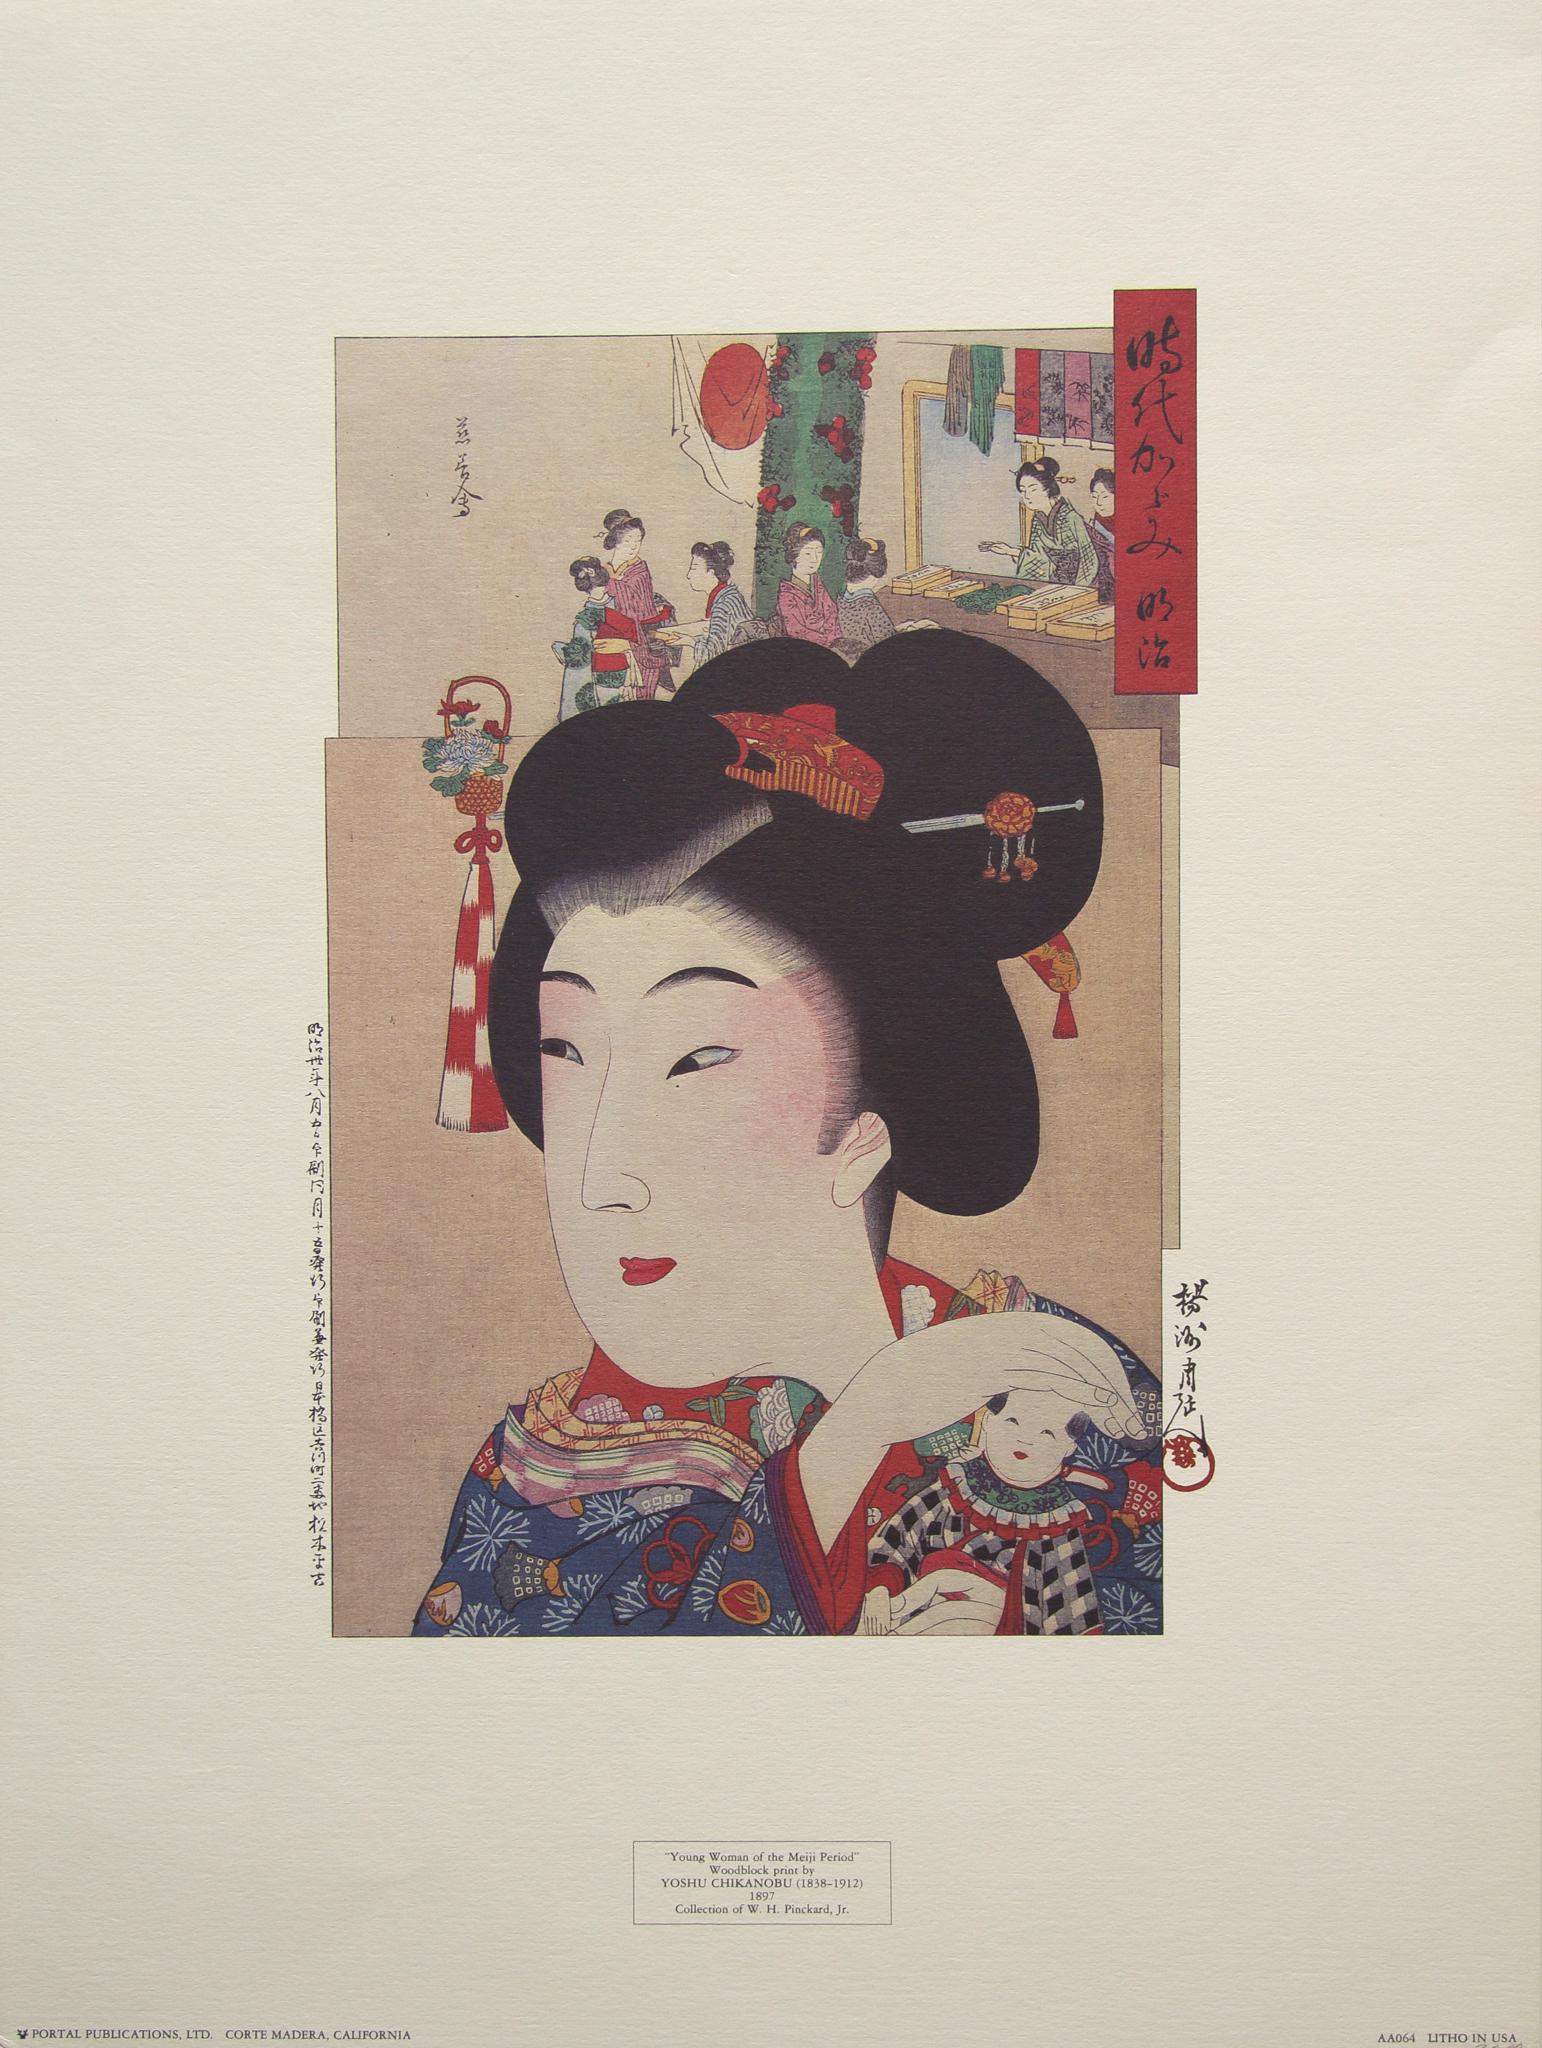 CHIKANOBU, Yoshu Portrait Print - "Young Woman of the Meiji" by Yoshu Chikanobu, Lithographic Print. 